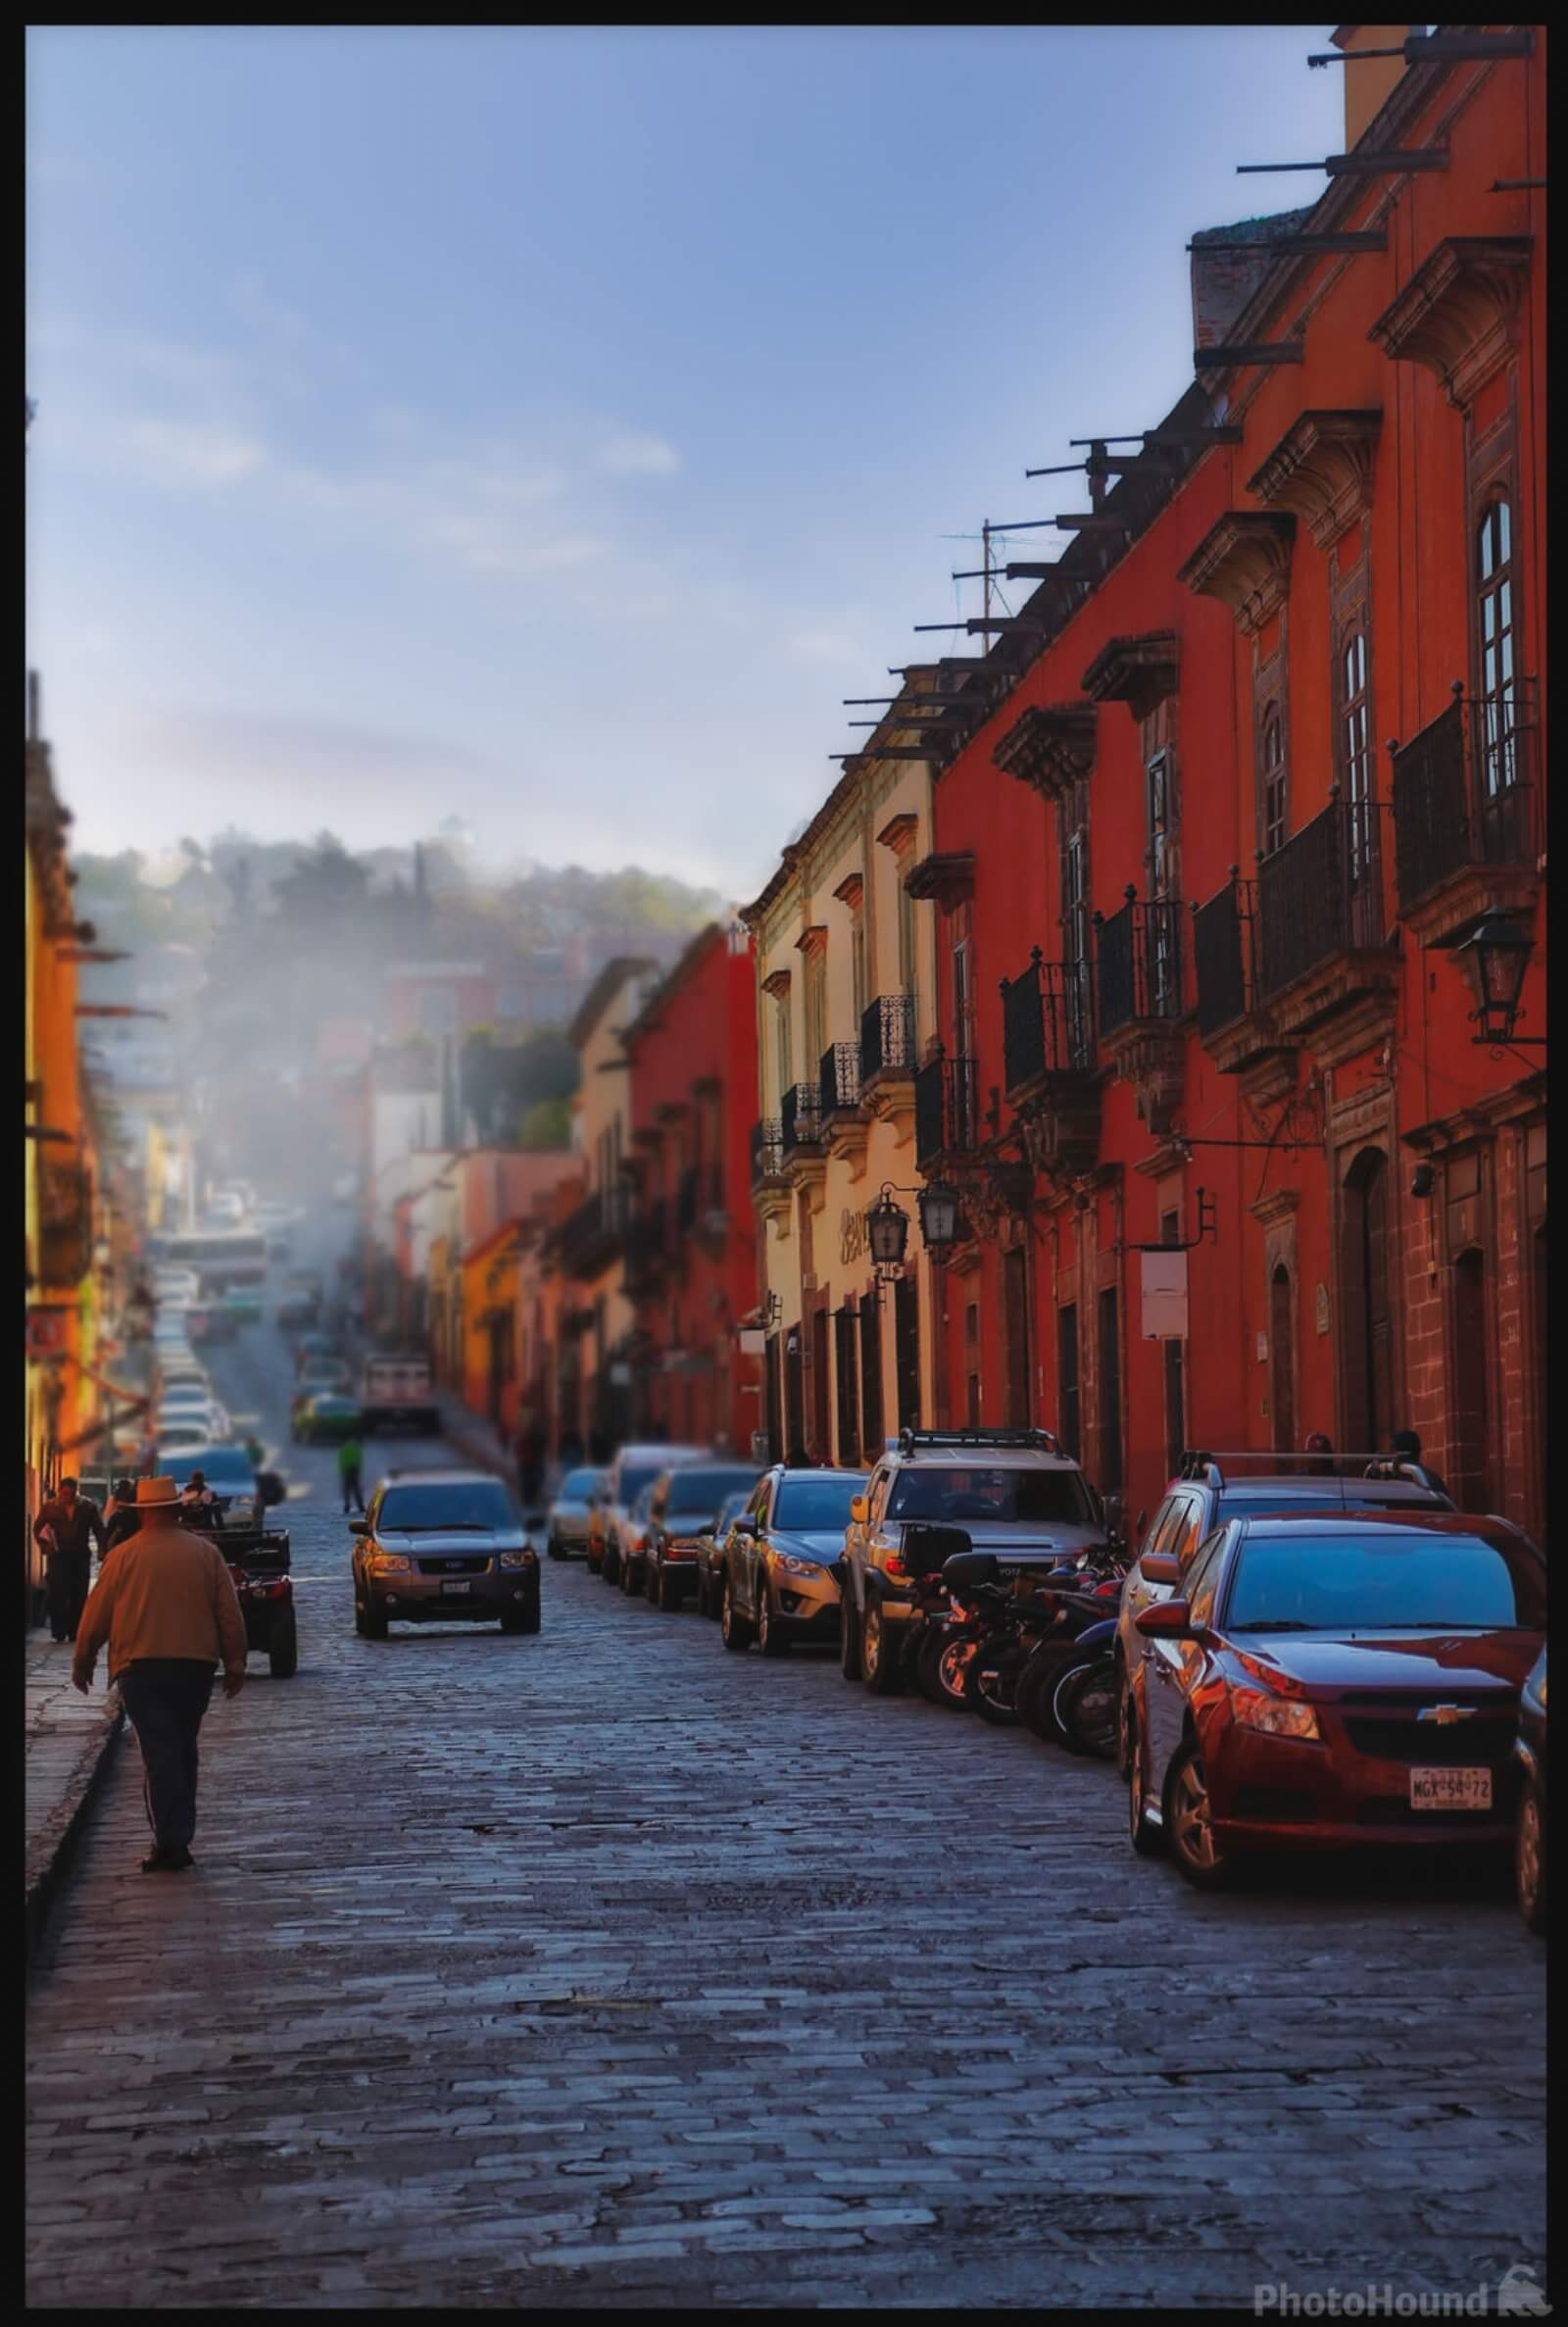 Image of Parroquia de San Miguel & streets of San Miguel de Allende by Vladeta Jericevic